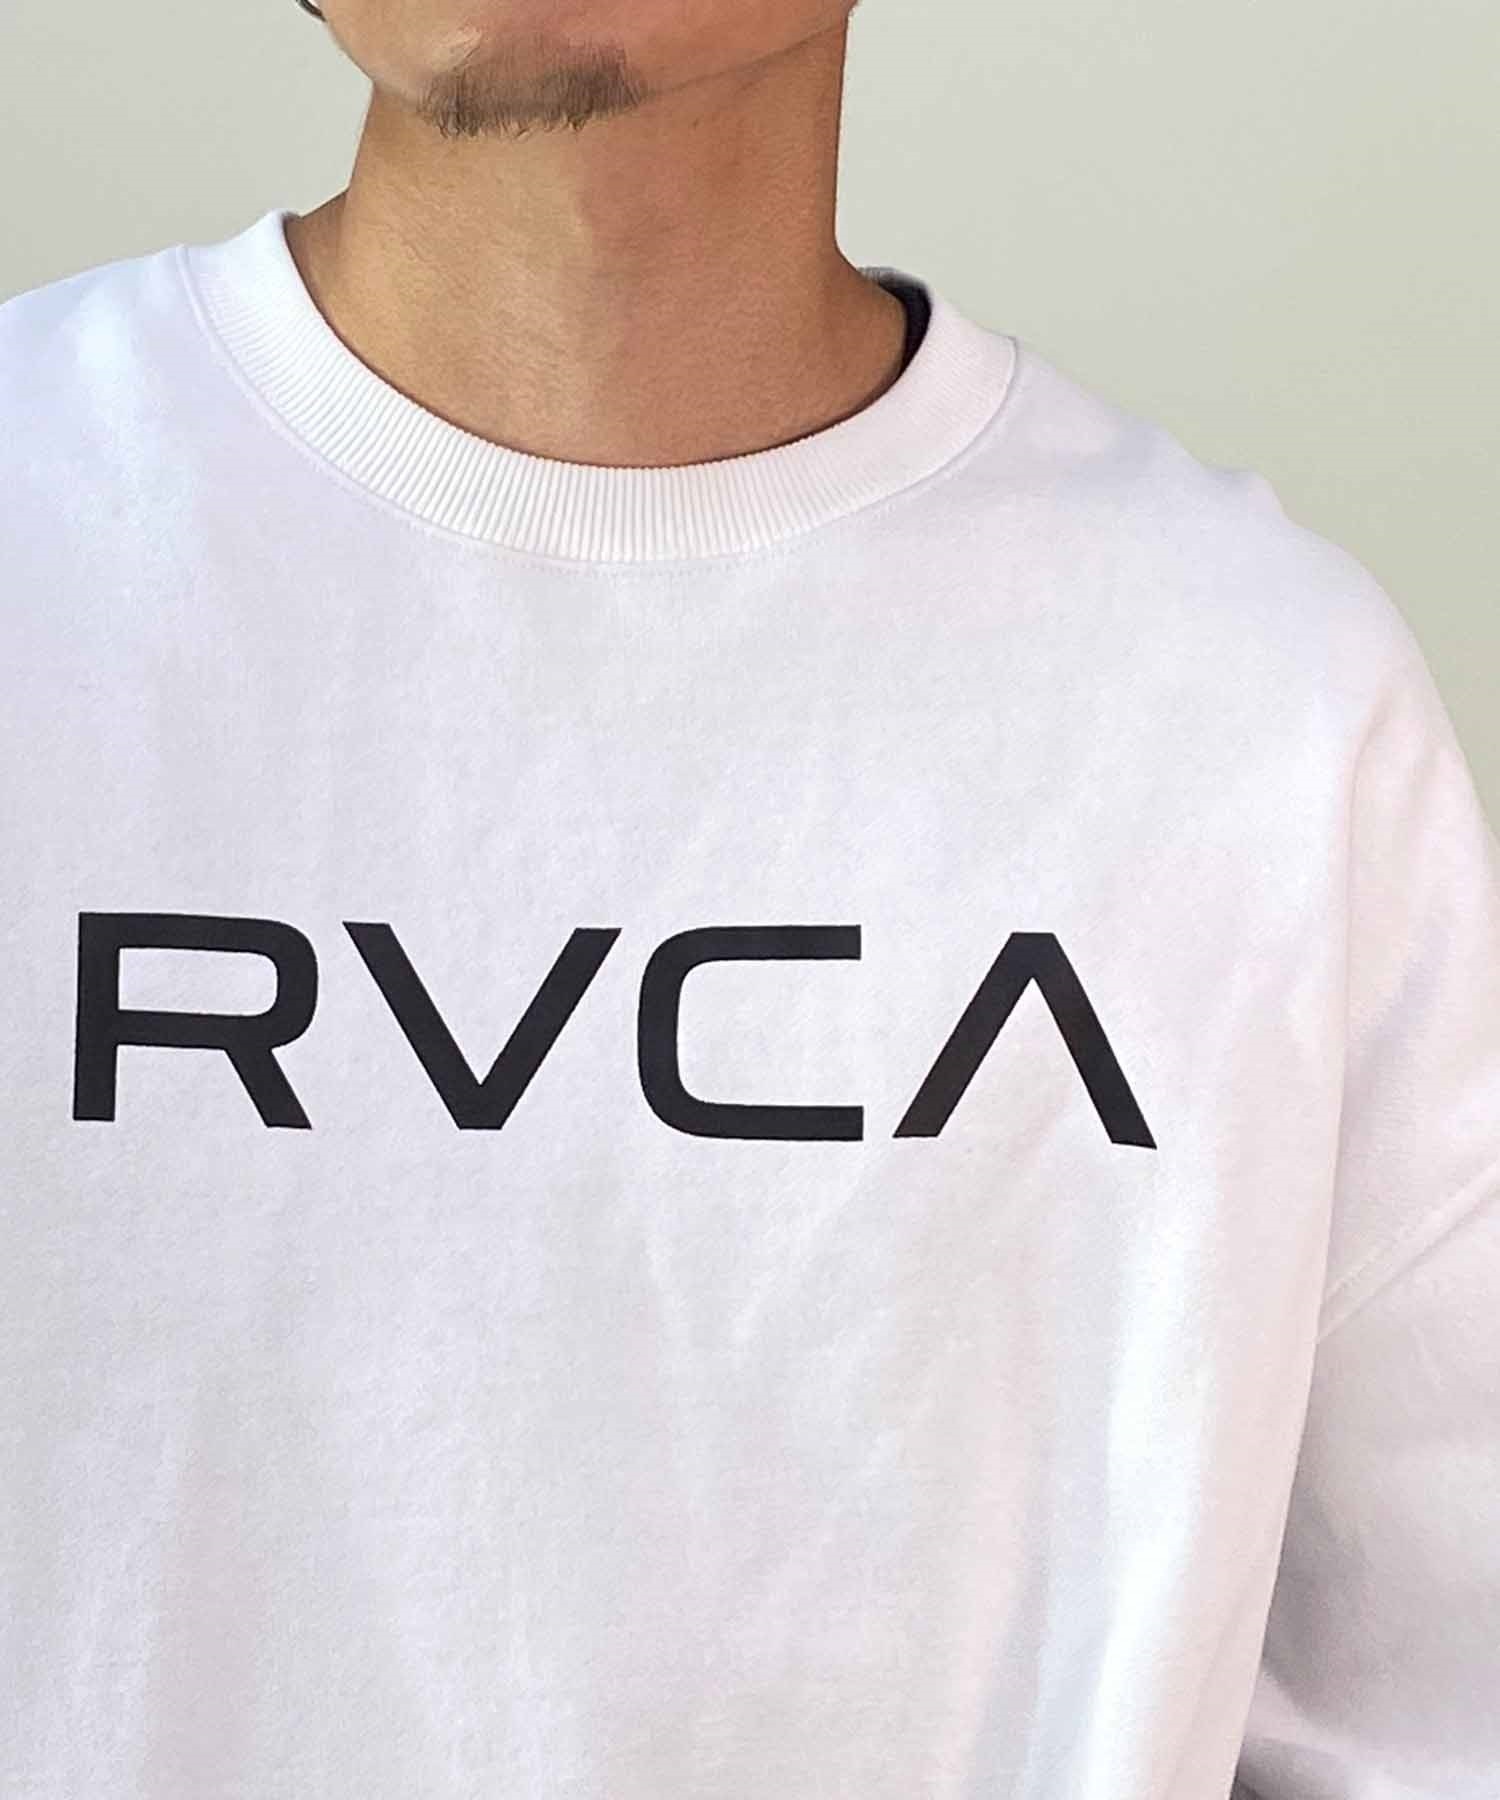 RVCA/ルーカ BIG RVCA CR メンズ トレーナー クルーネック スウェット オーバーサイズ 裏起毛 BD042-151(WHT-S)